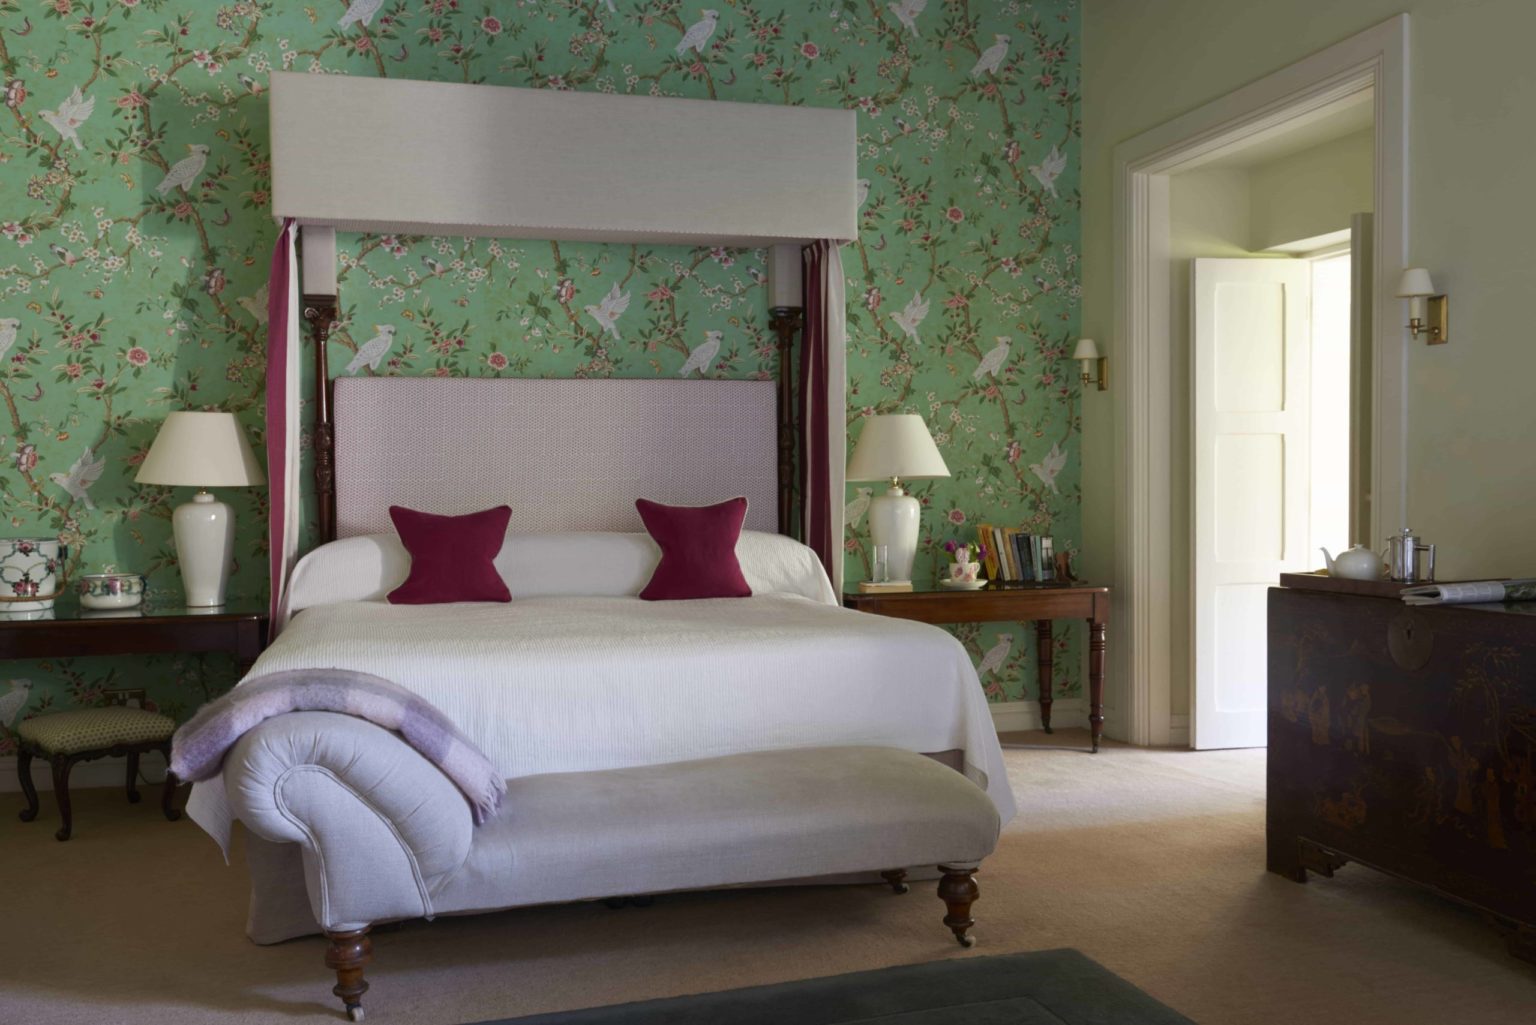 Gregans Castle Hotel, Ballyvaughan - Good Hotel Guide expert review